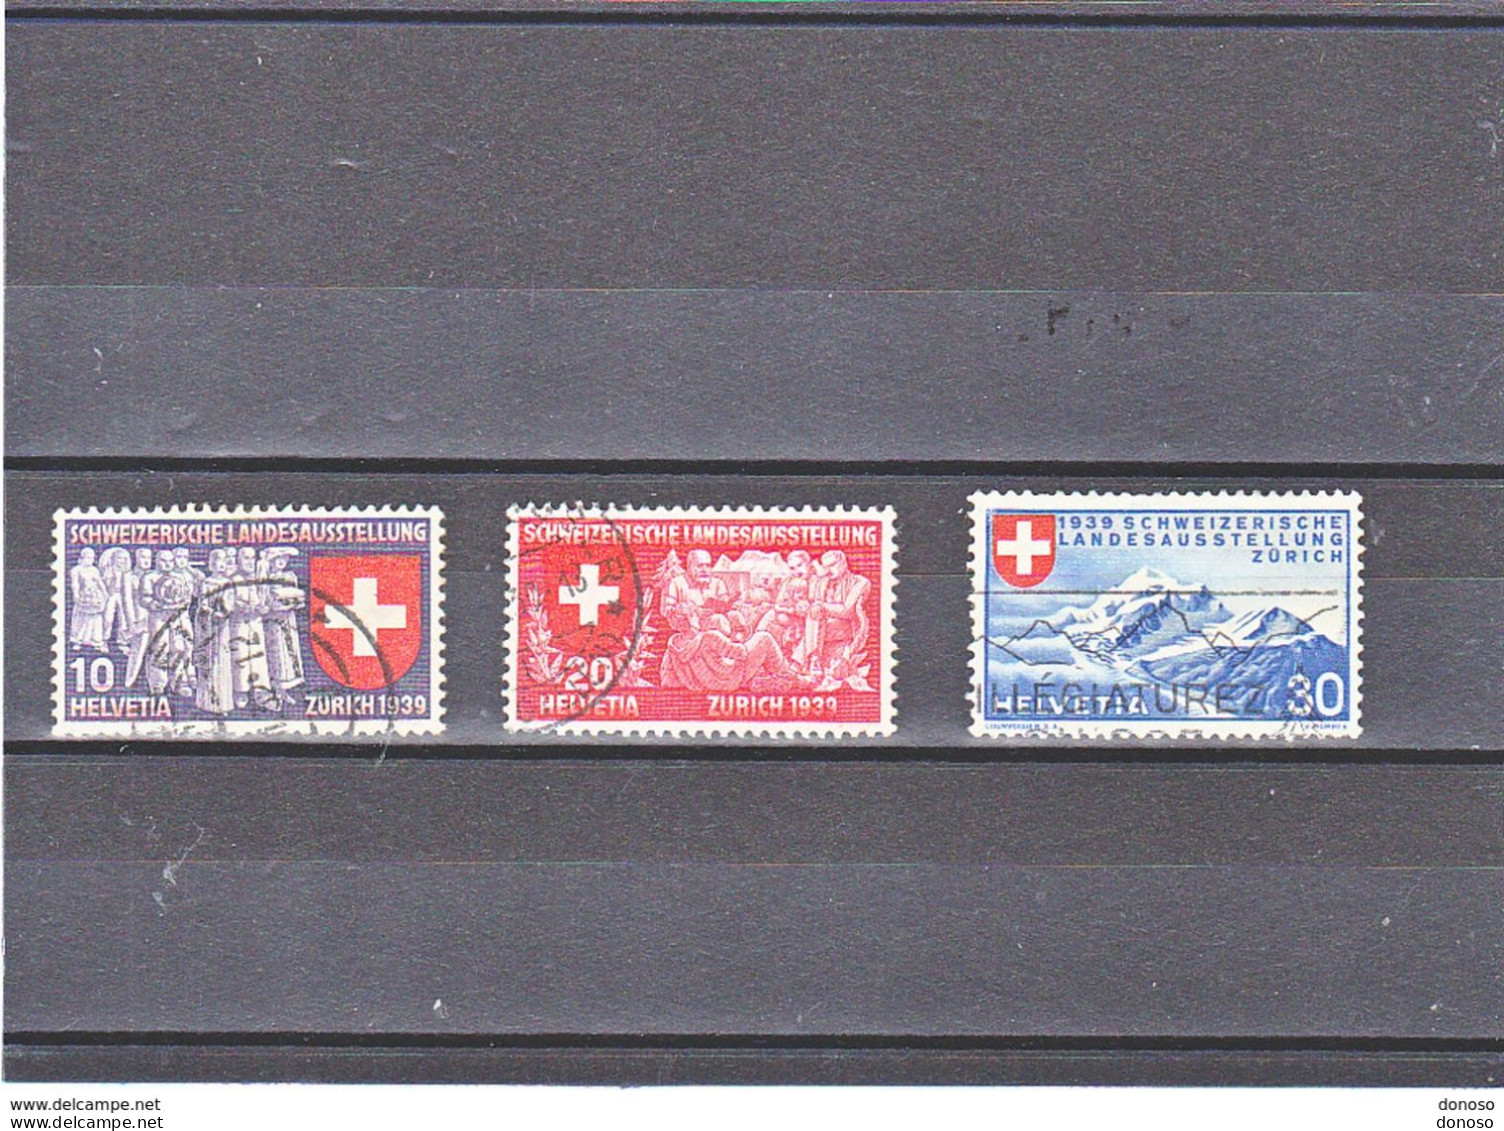 SUISSE 1939 Yvert 326-328, Michel 335-337 Oblitéré, Used Cote 9,30 Euros - Used Stamps